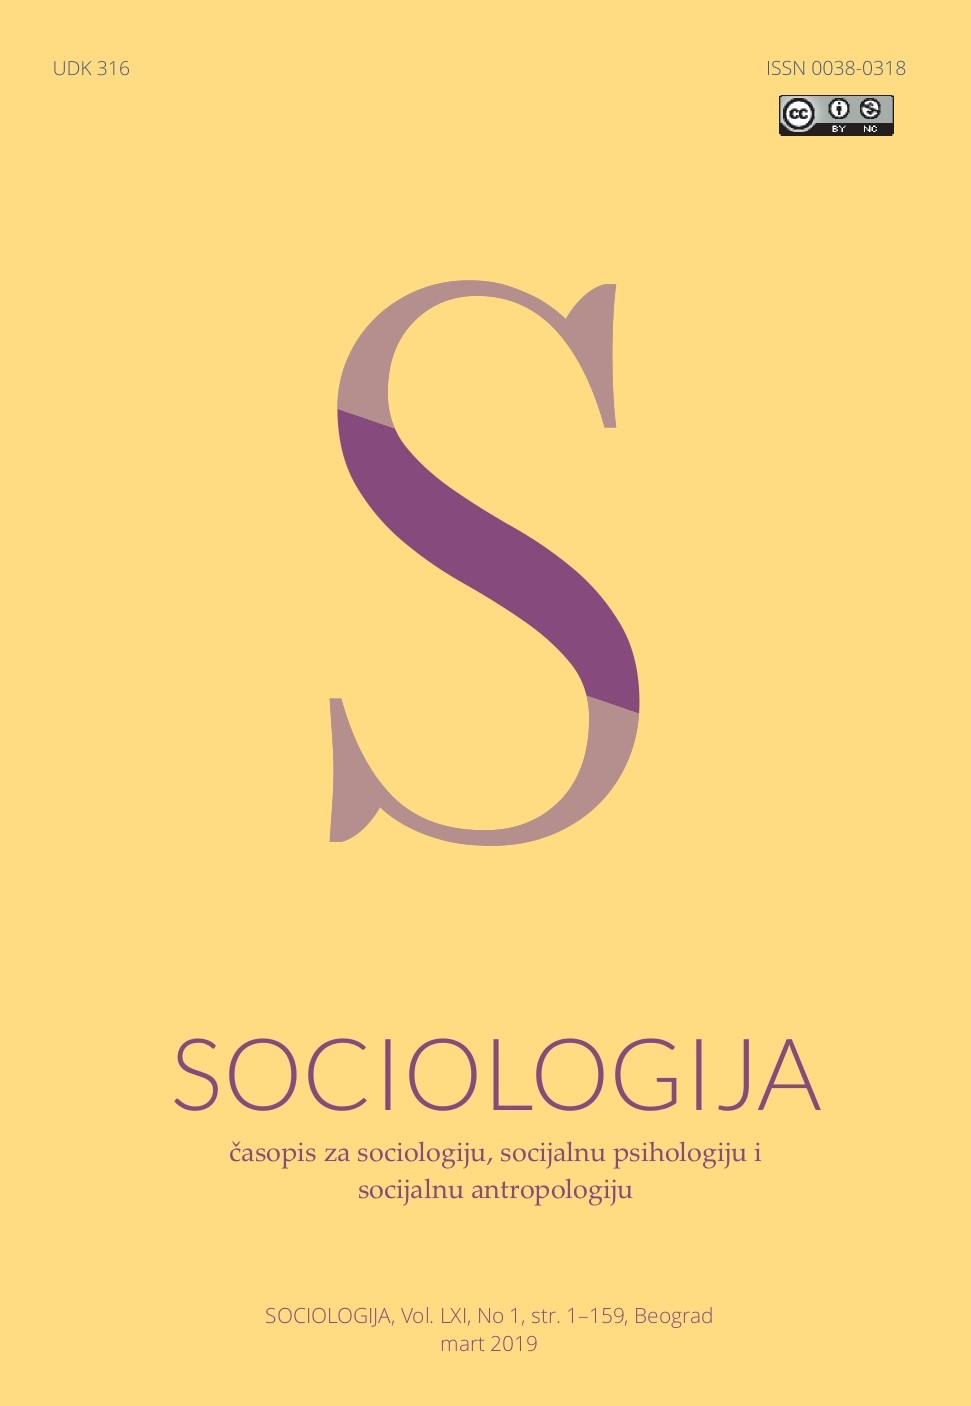 Sociološko polje, fraktalne distinkcije i moral: o povoju analitičke sociologije